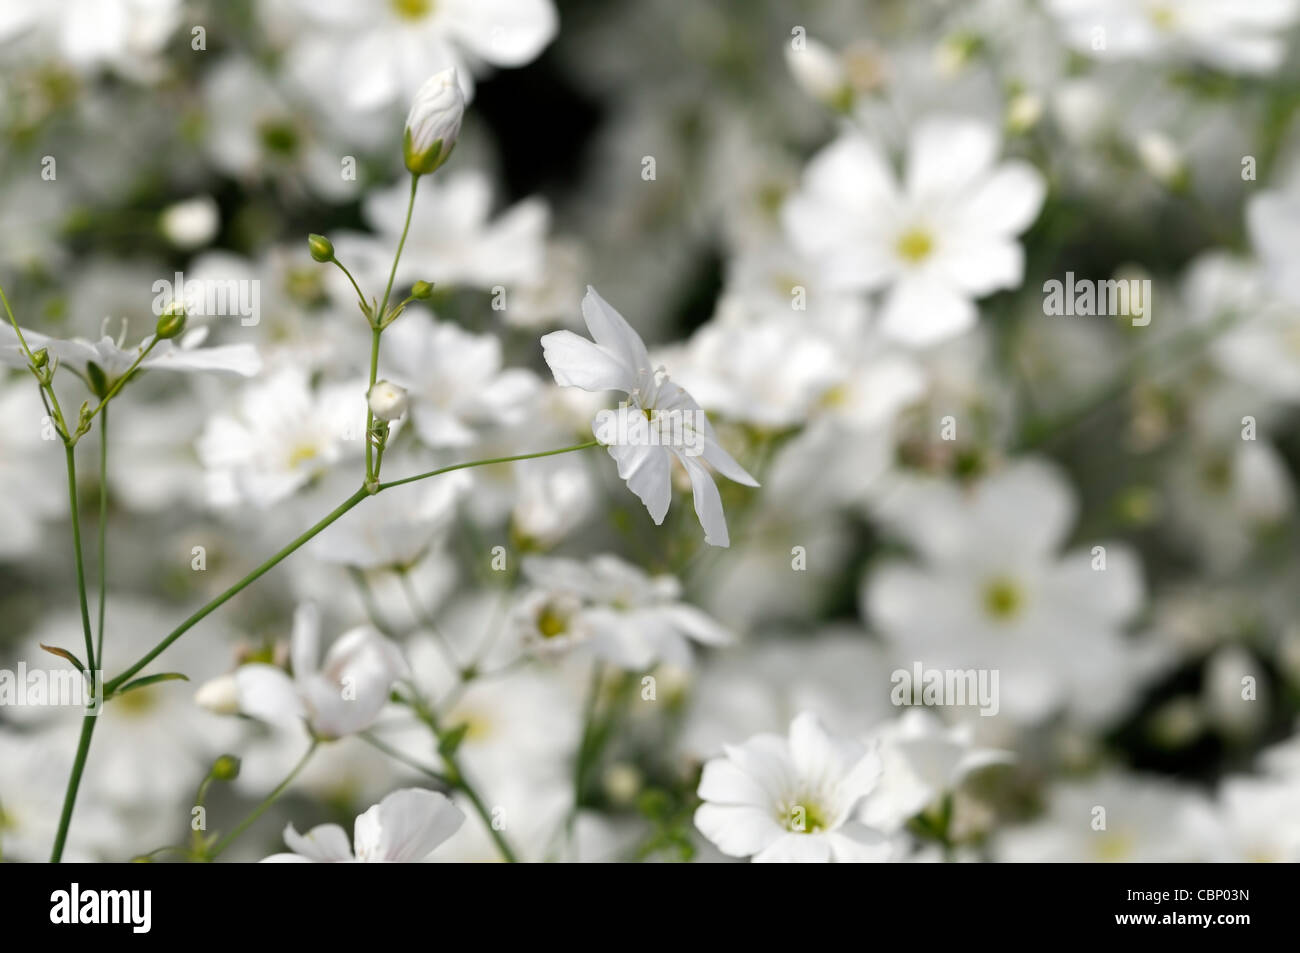 Gypsophila elegans Covent Garden White flower bloom blossom Babys Breath half hardy annuals profuse profusion flowers Stock Photo